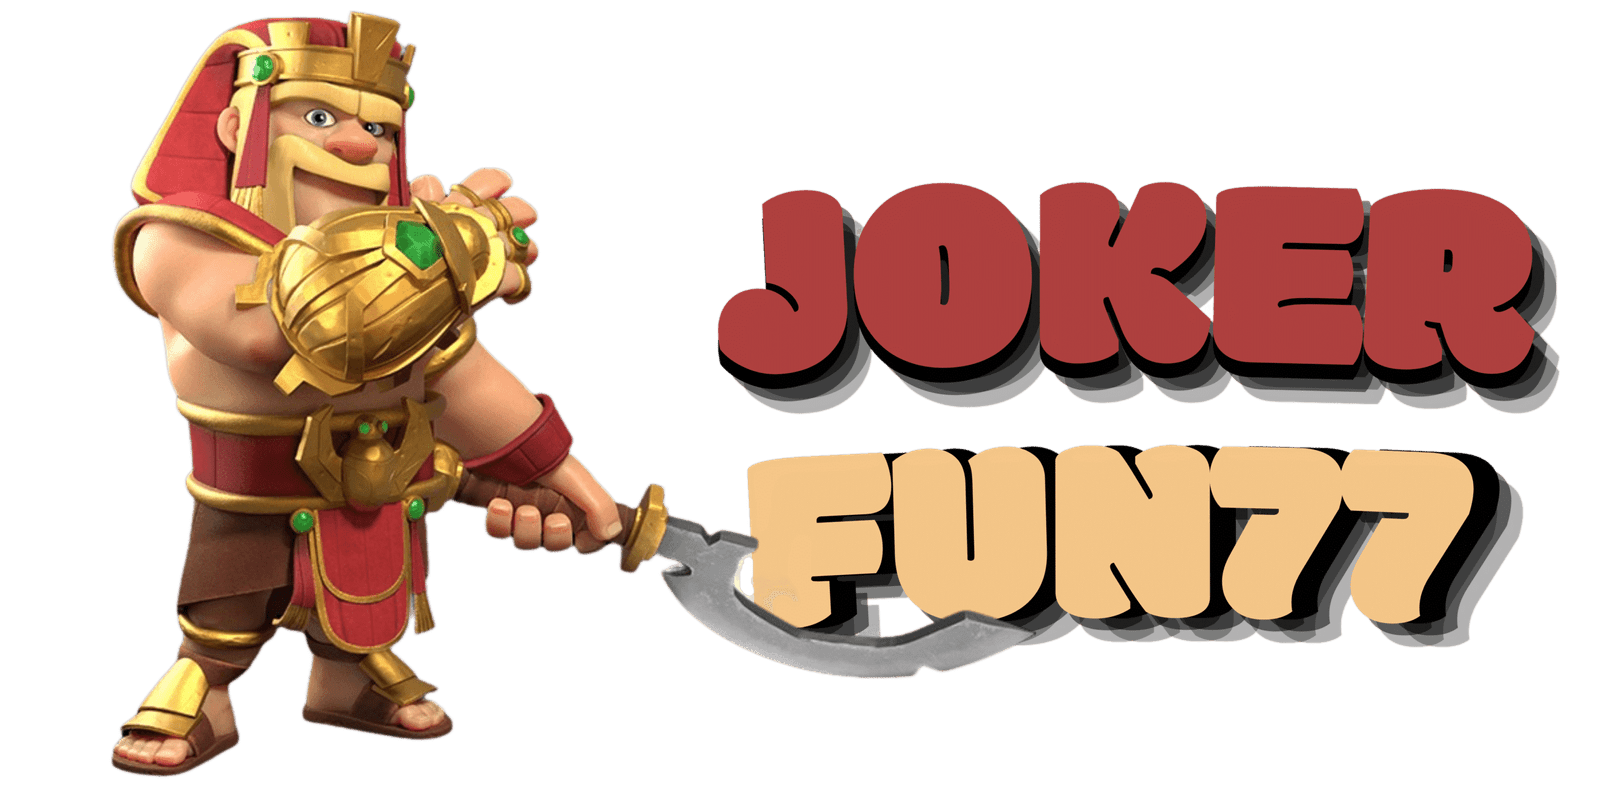 joker-fun77-logo-2